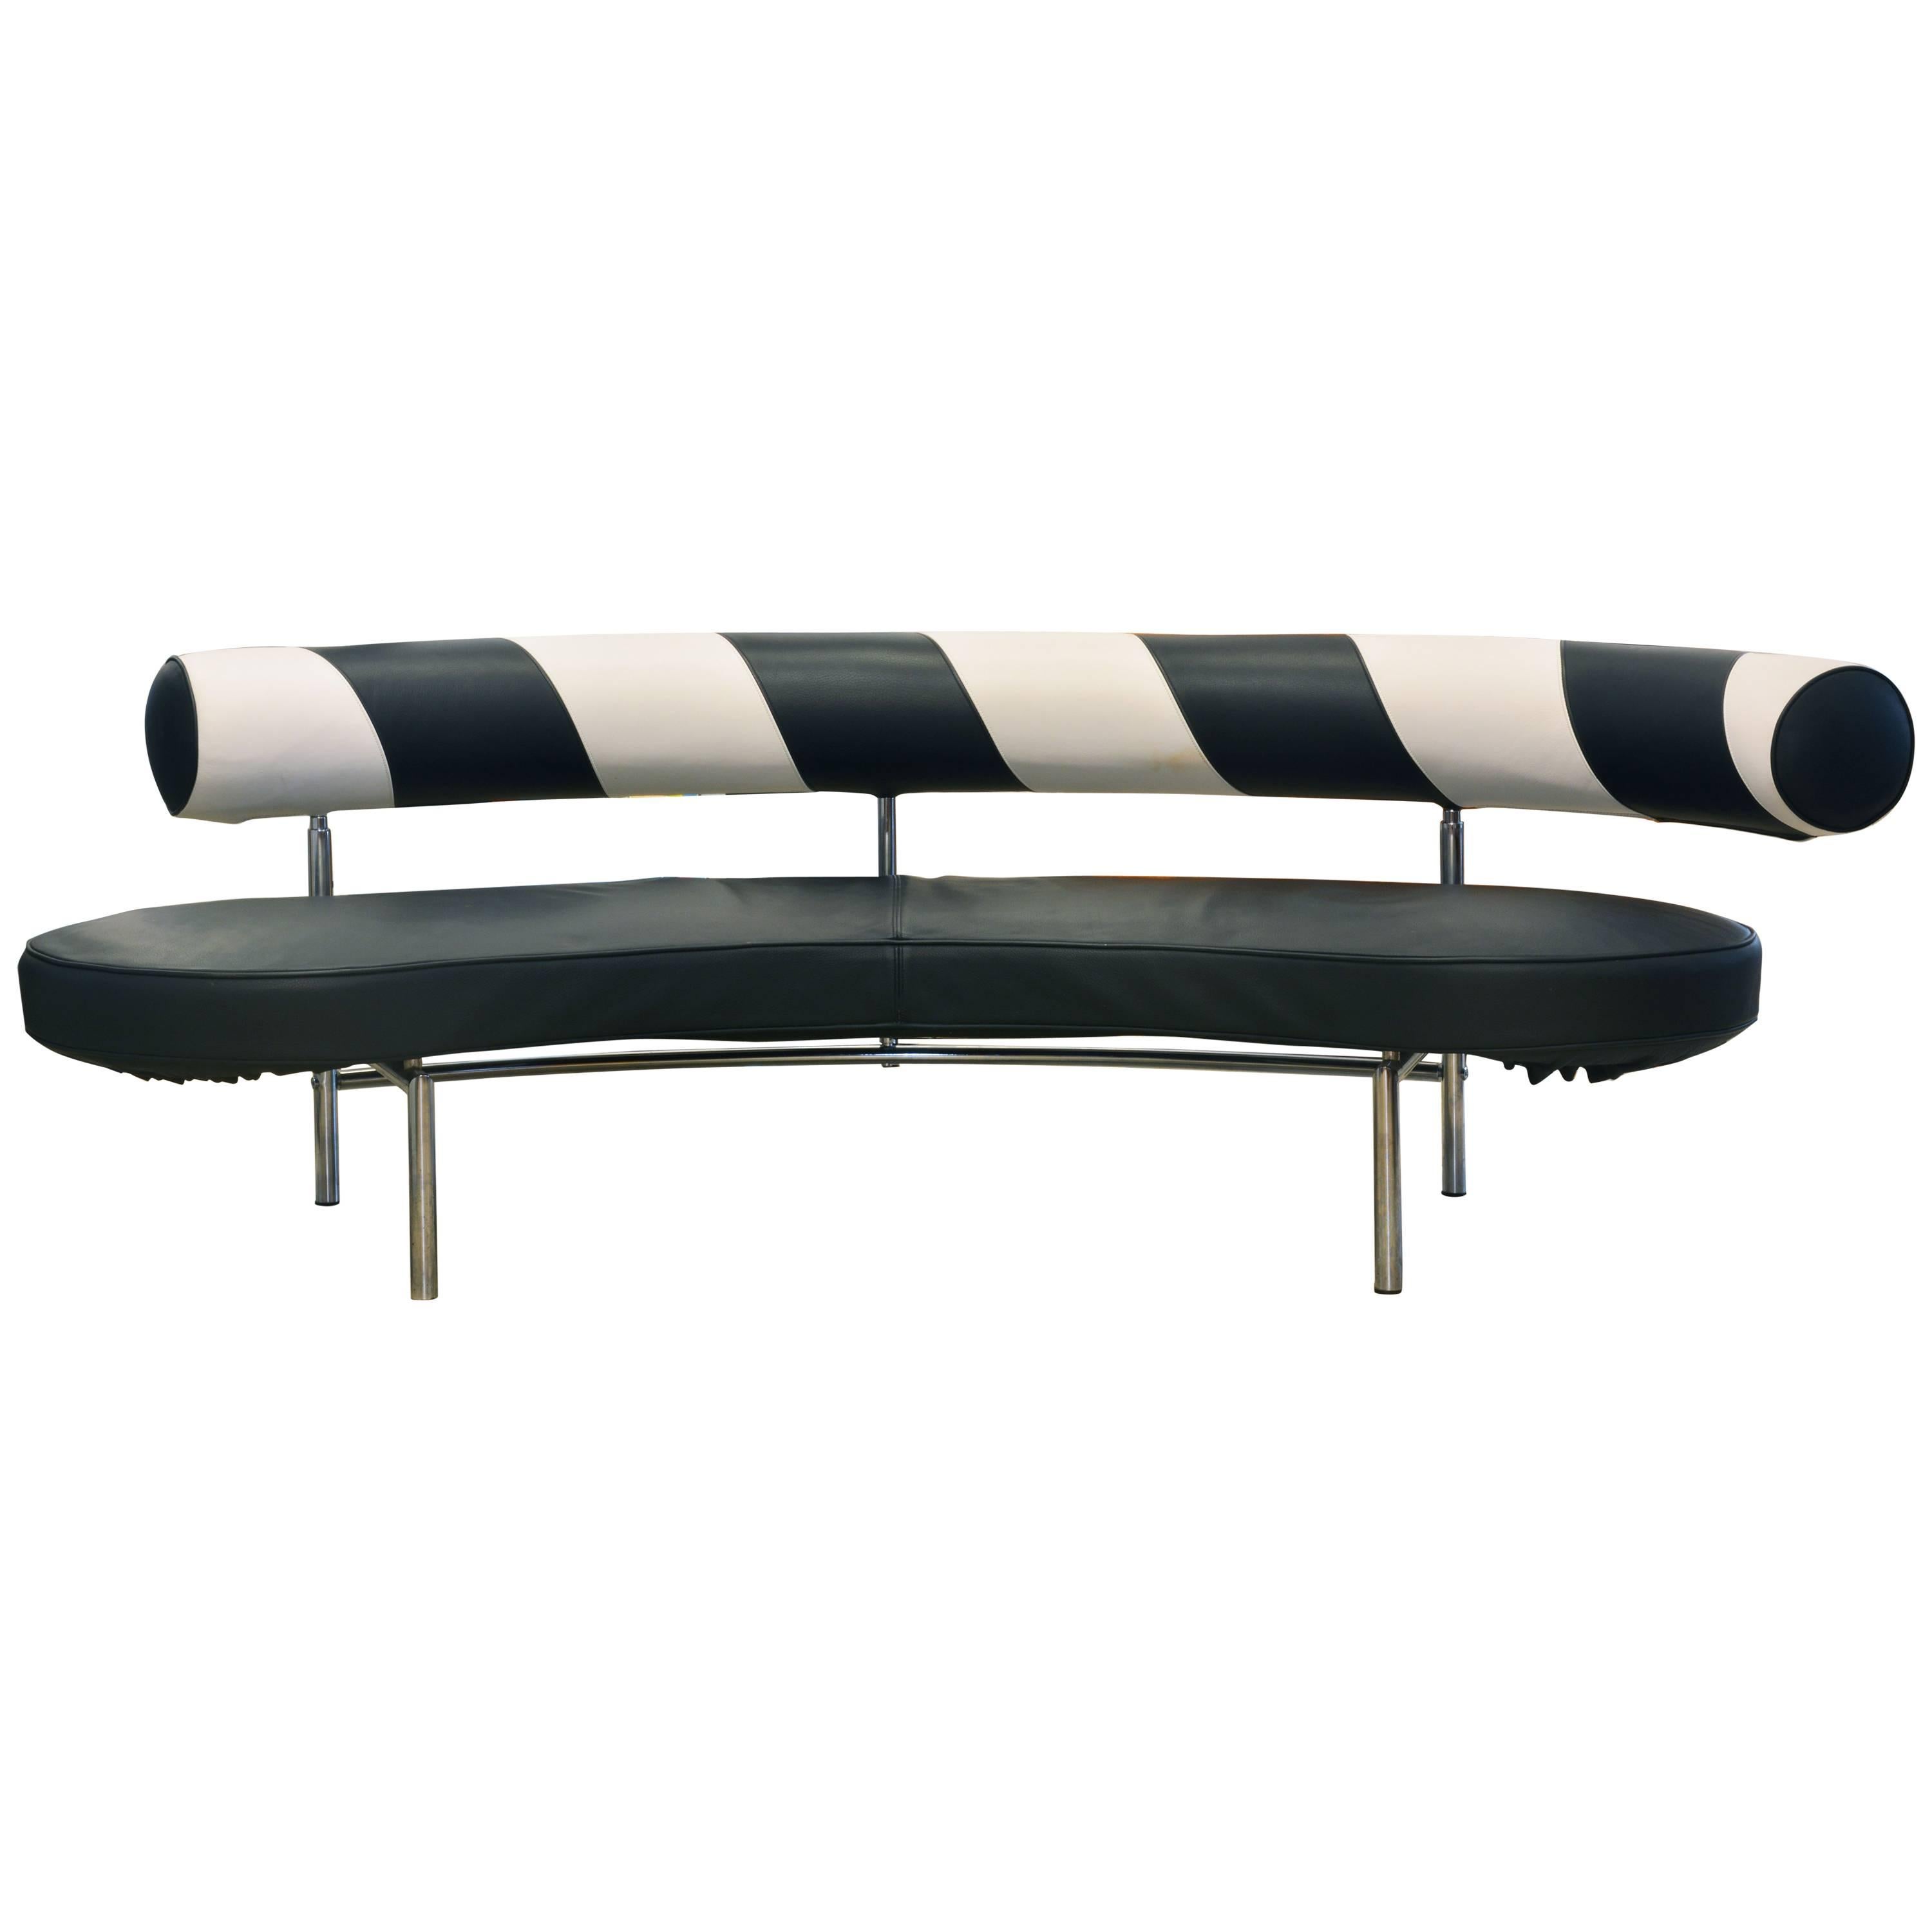 MAX Leather Sofa by Antonio Citterio for Flexform Italy 20th Century Design Icon